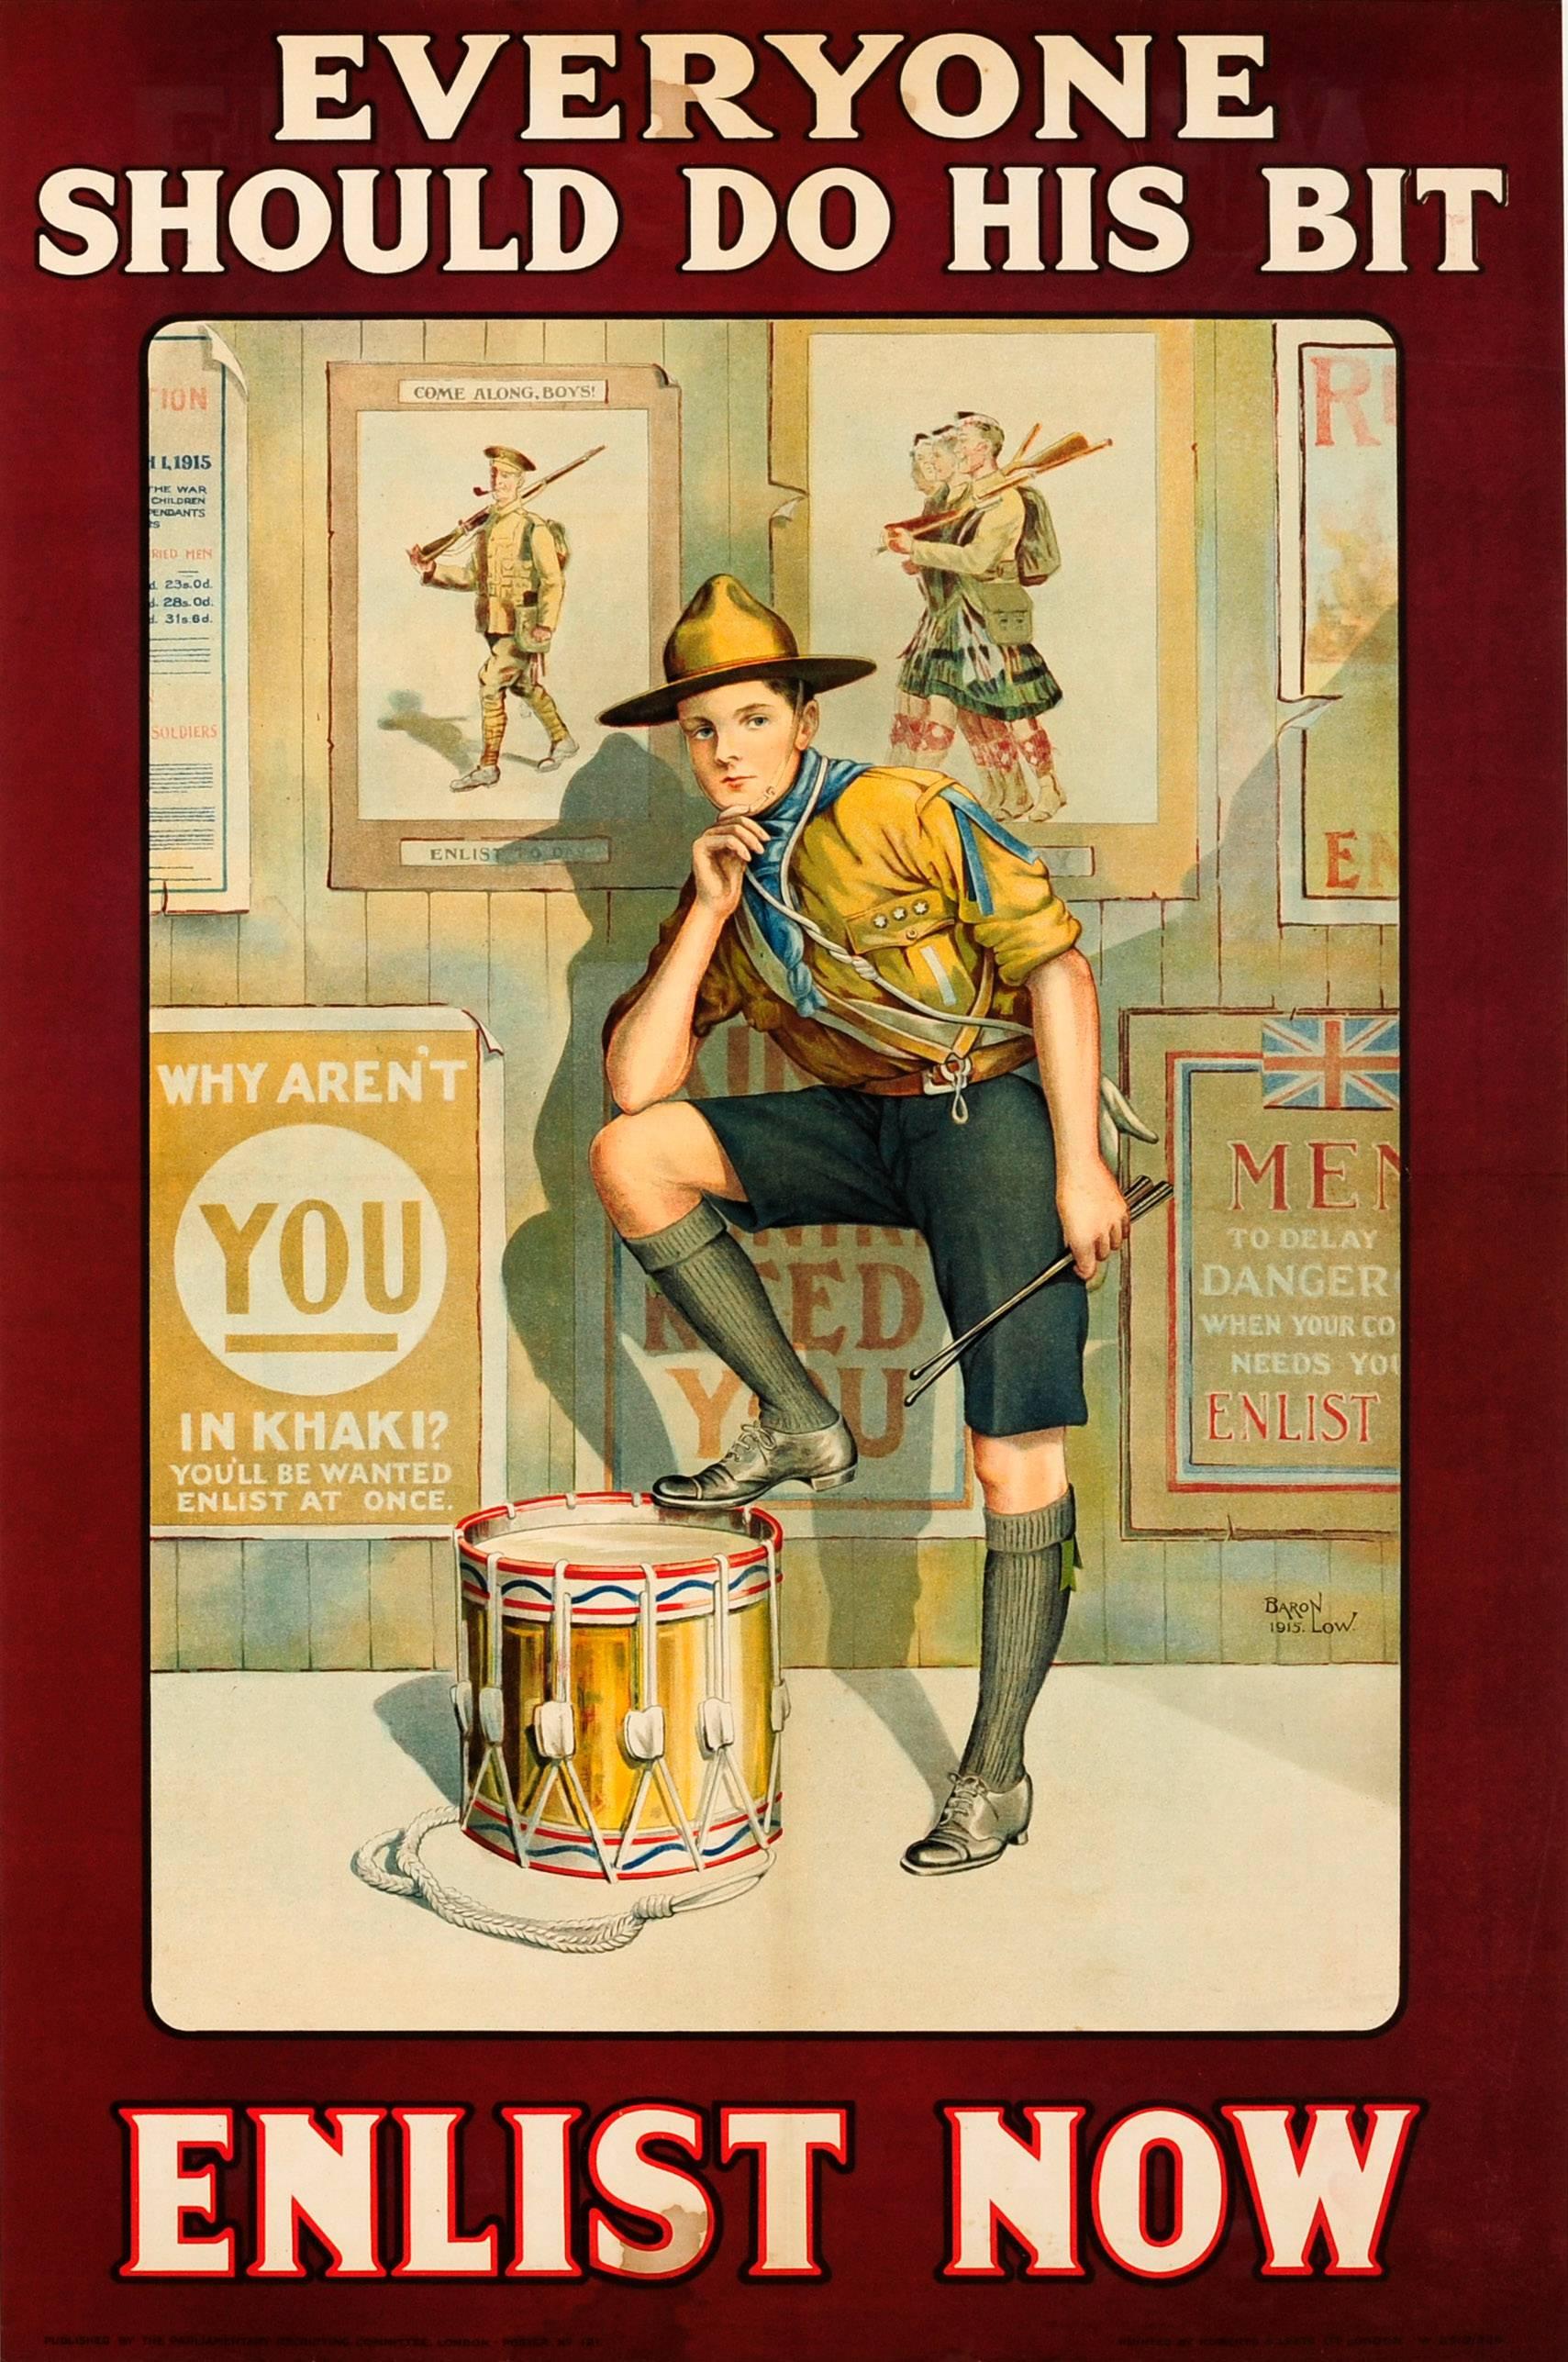 Baron Low Print - Original British WWI Recruitment Poster - Everyone Should Do His Bit Enlist Now